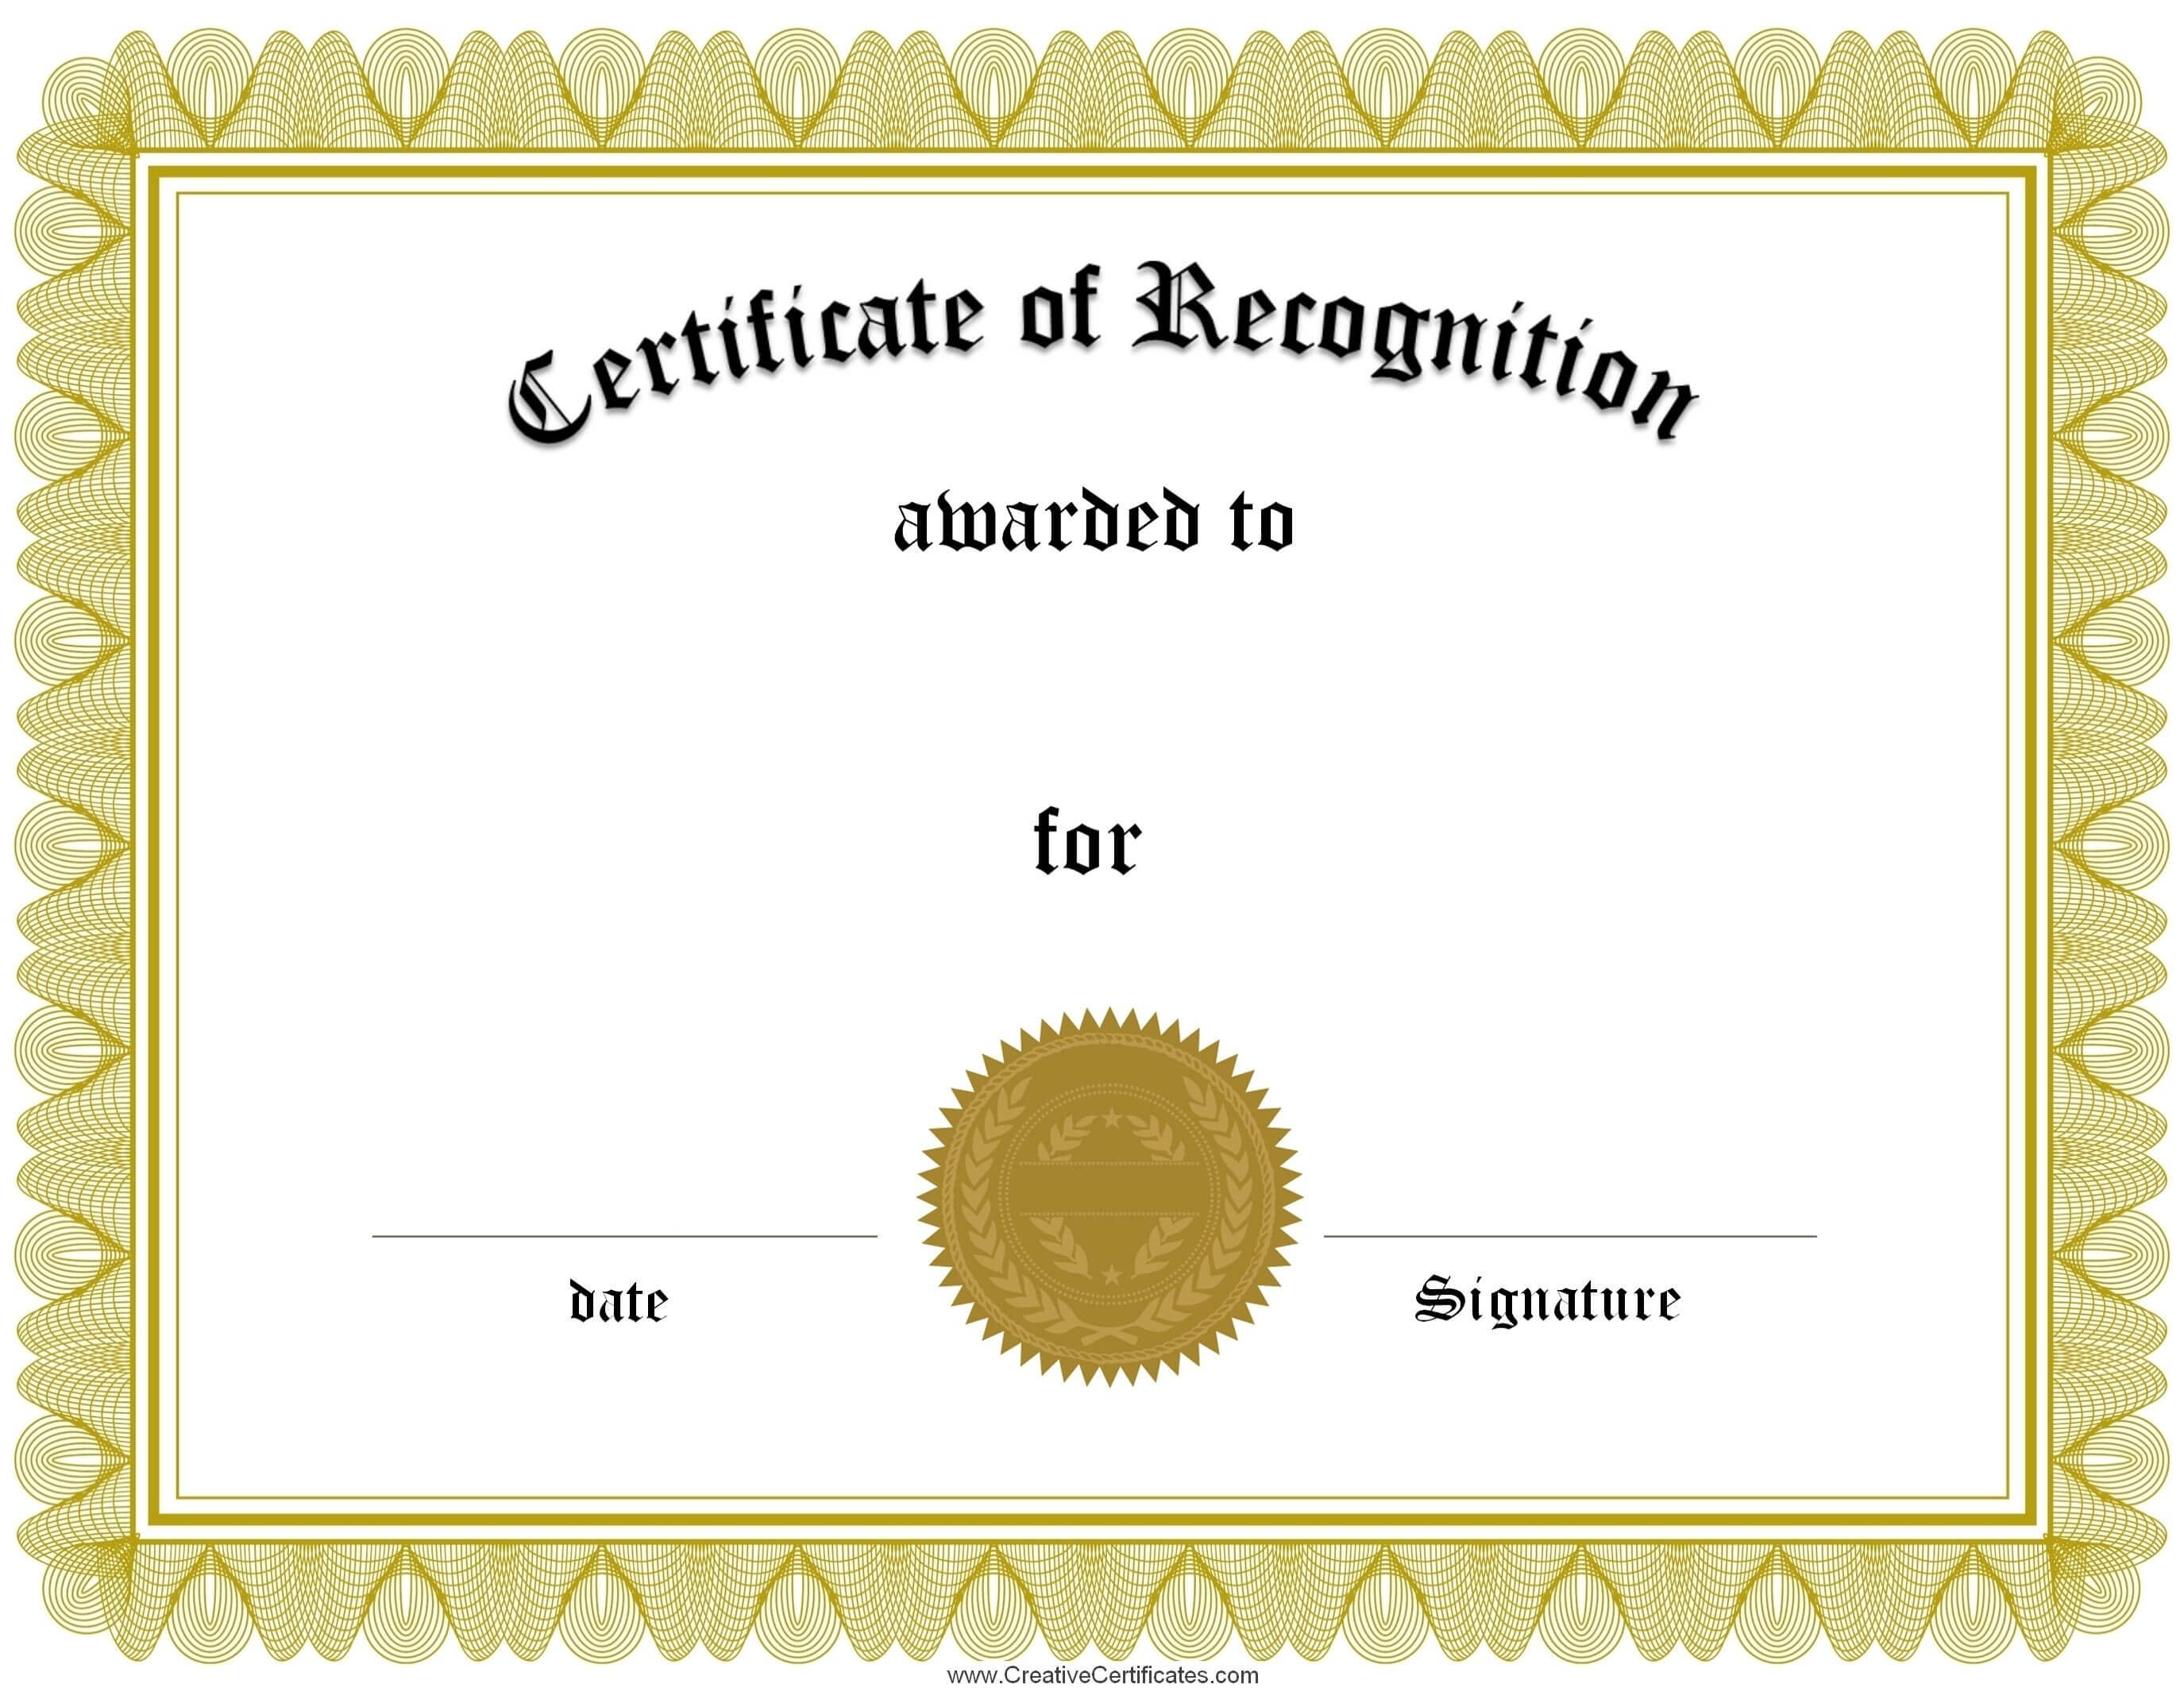 Certificates. Inspiring Recognition Certificate Template Regarding Template For Recognition Certificate